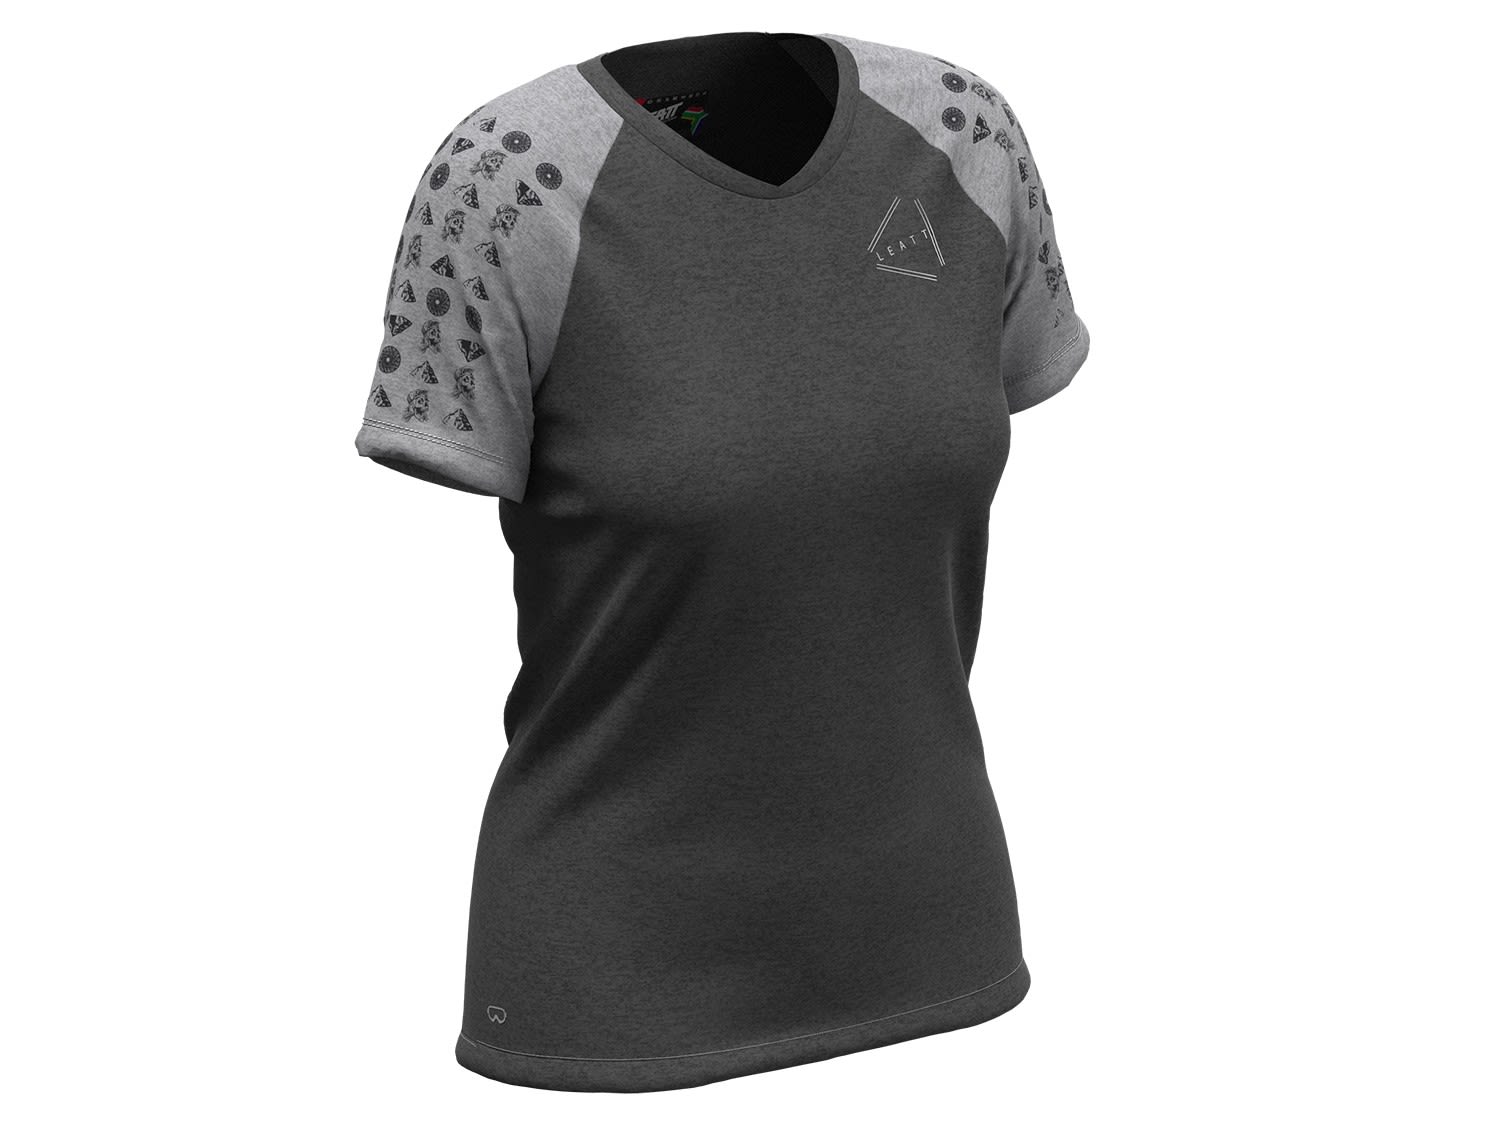 Leatt MTB All Mountain 2-0 Jersey Grau- Female Kurzarm-Shirts- Grsse L - Farbe Black